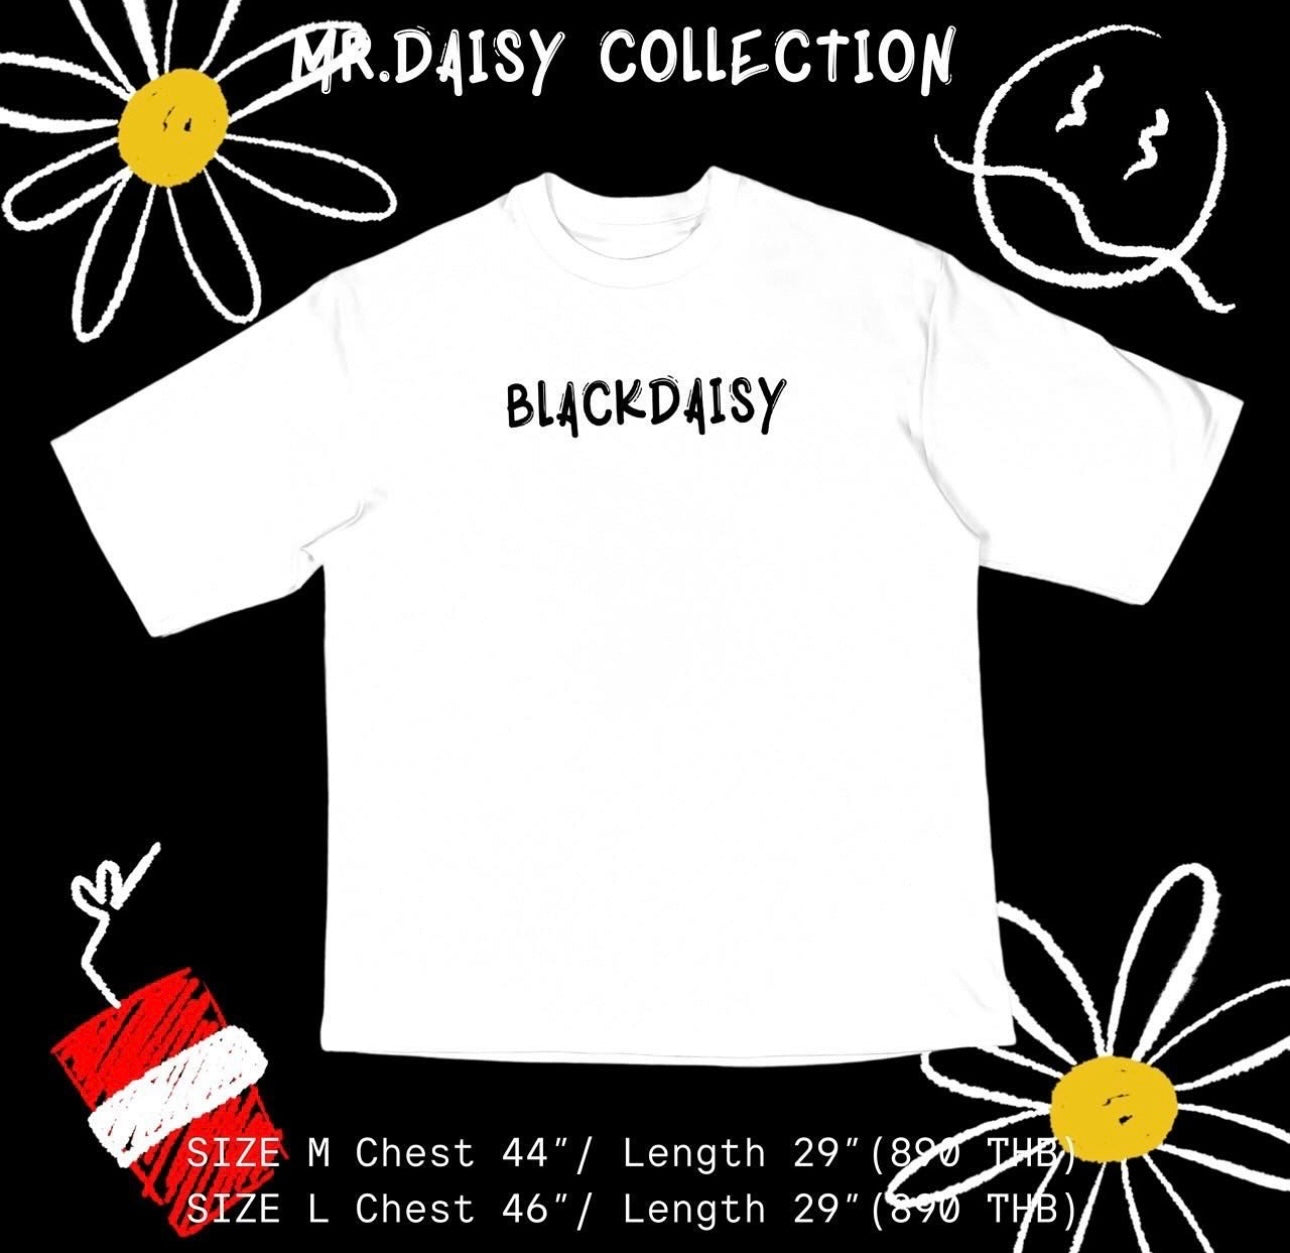 domundi James SU BLACKDAISY 
MR.DAISY COLLECTION
tshirt